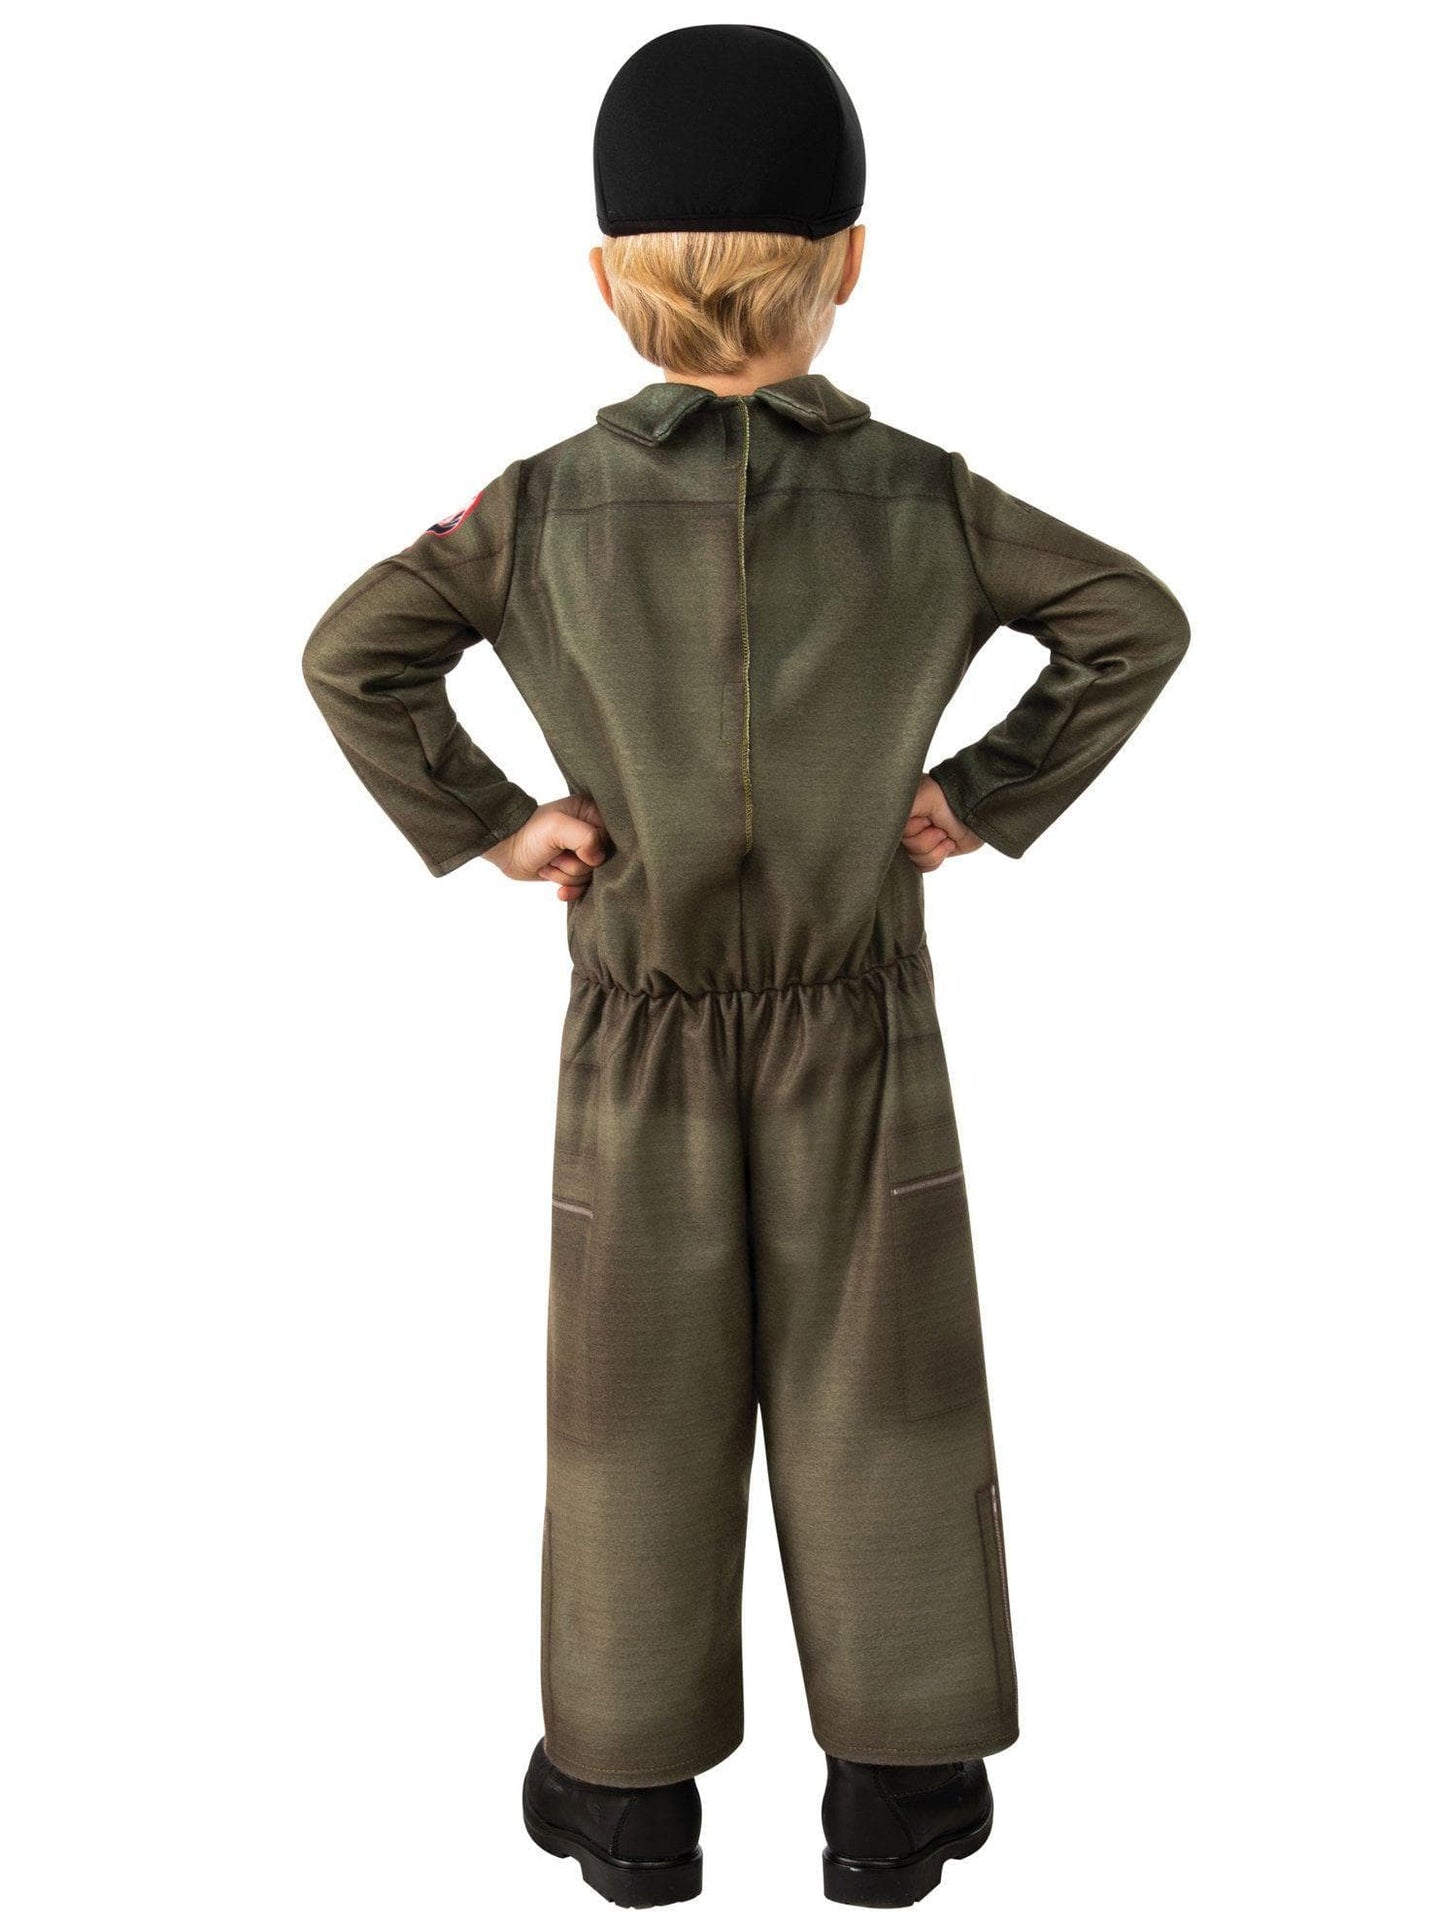 Top Gun Maverick Unisex Disfraz de niño pequeño